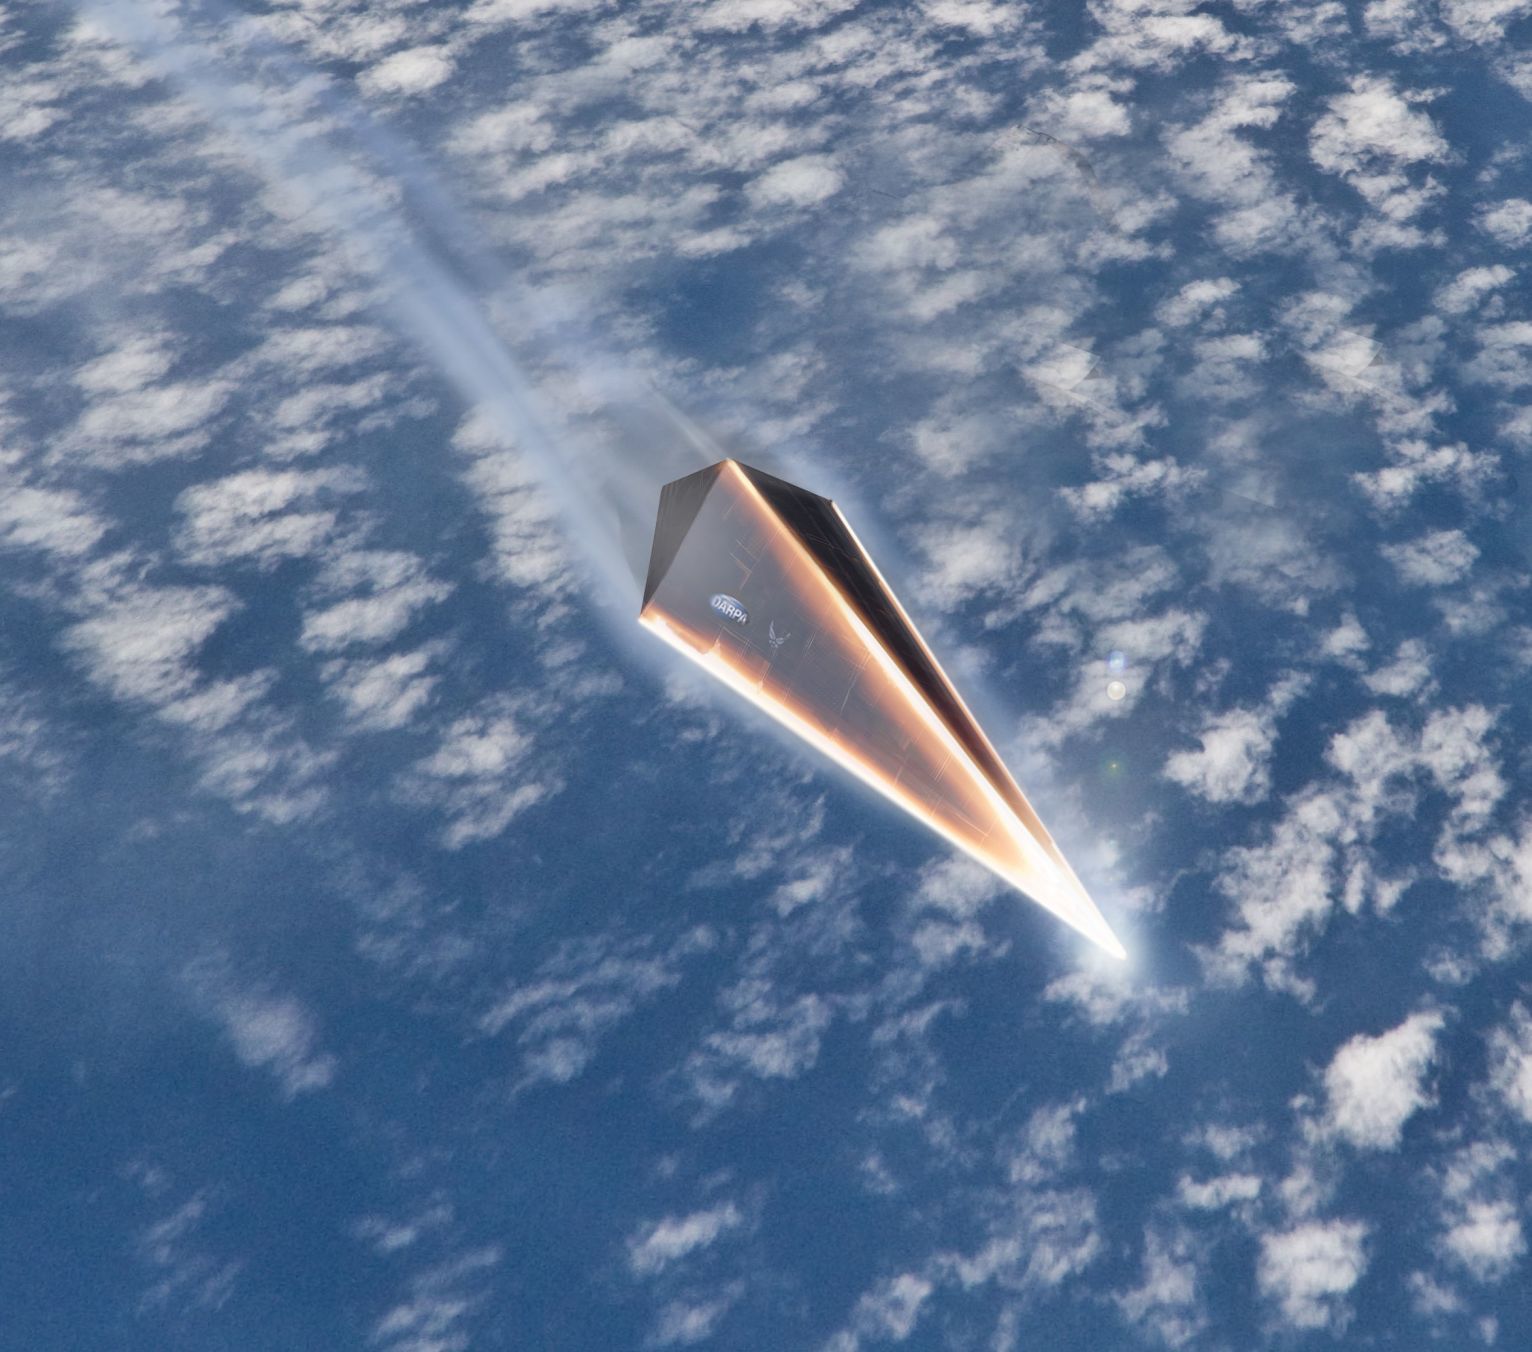 hypersonic 2 ushfree